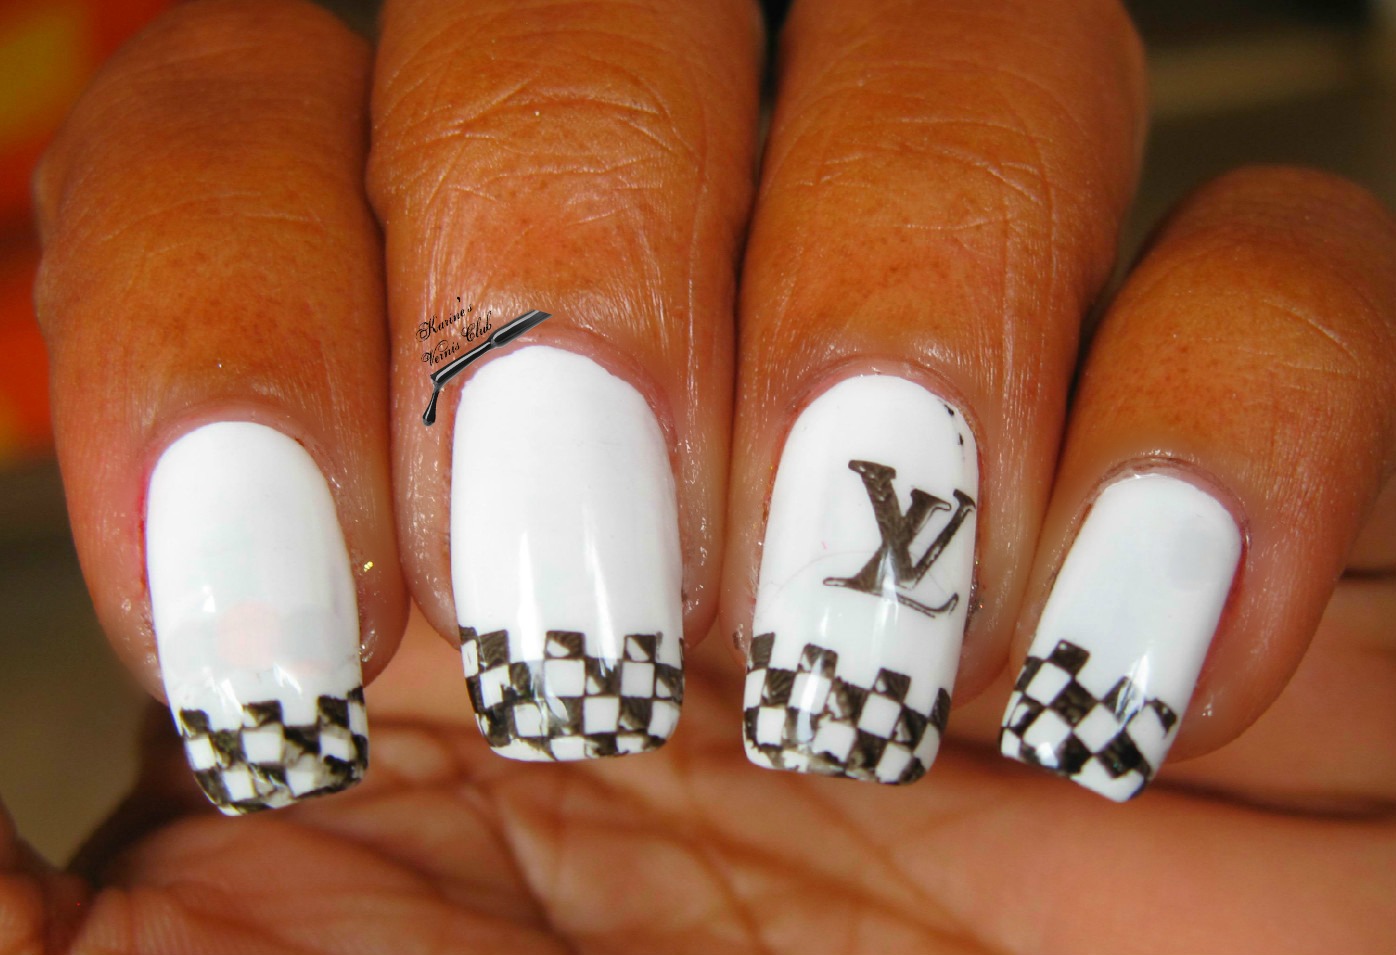 Who needs a Bag ✨ Louis Vuitton Nails #fyp #louisvuittonnails #col